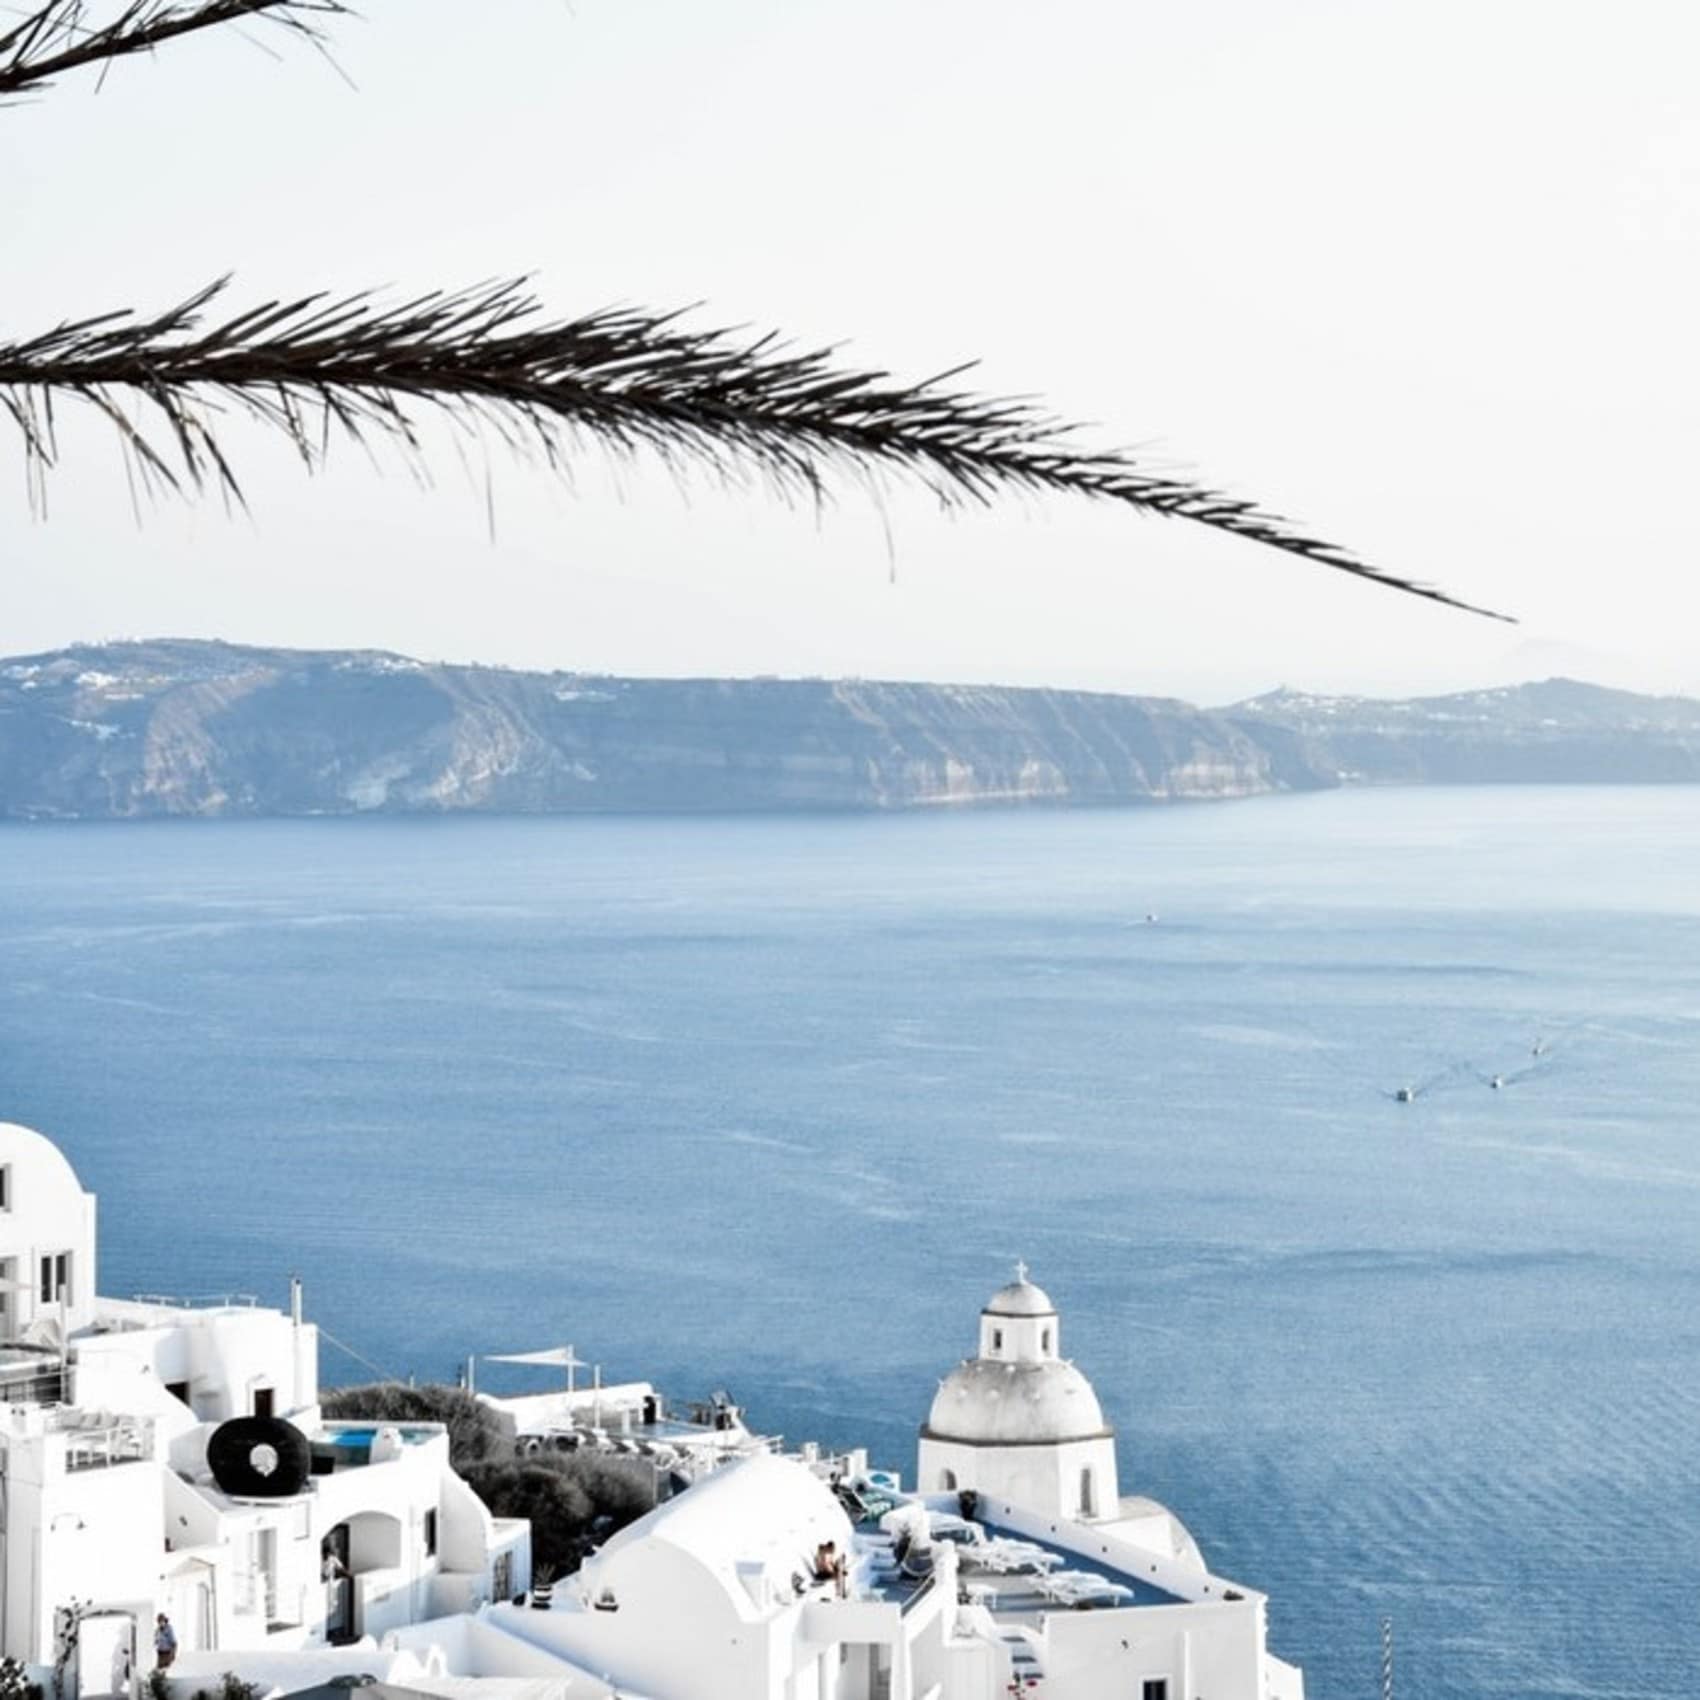 Villa rentals stud the cliffs of Santorini in Greece